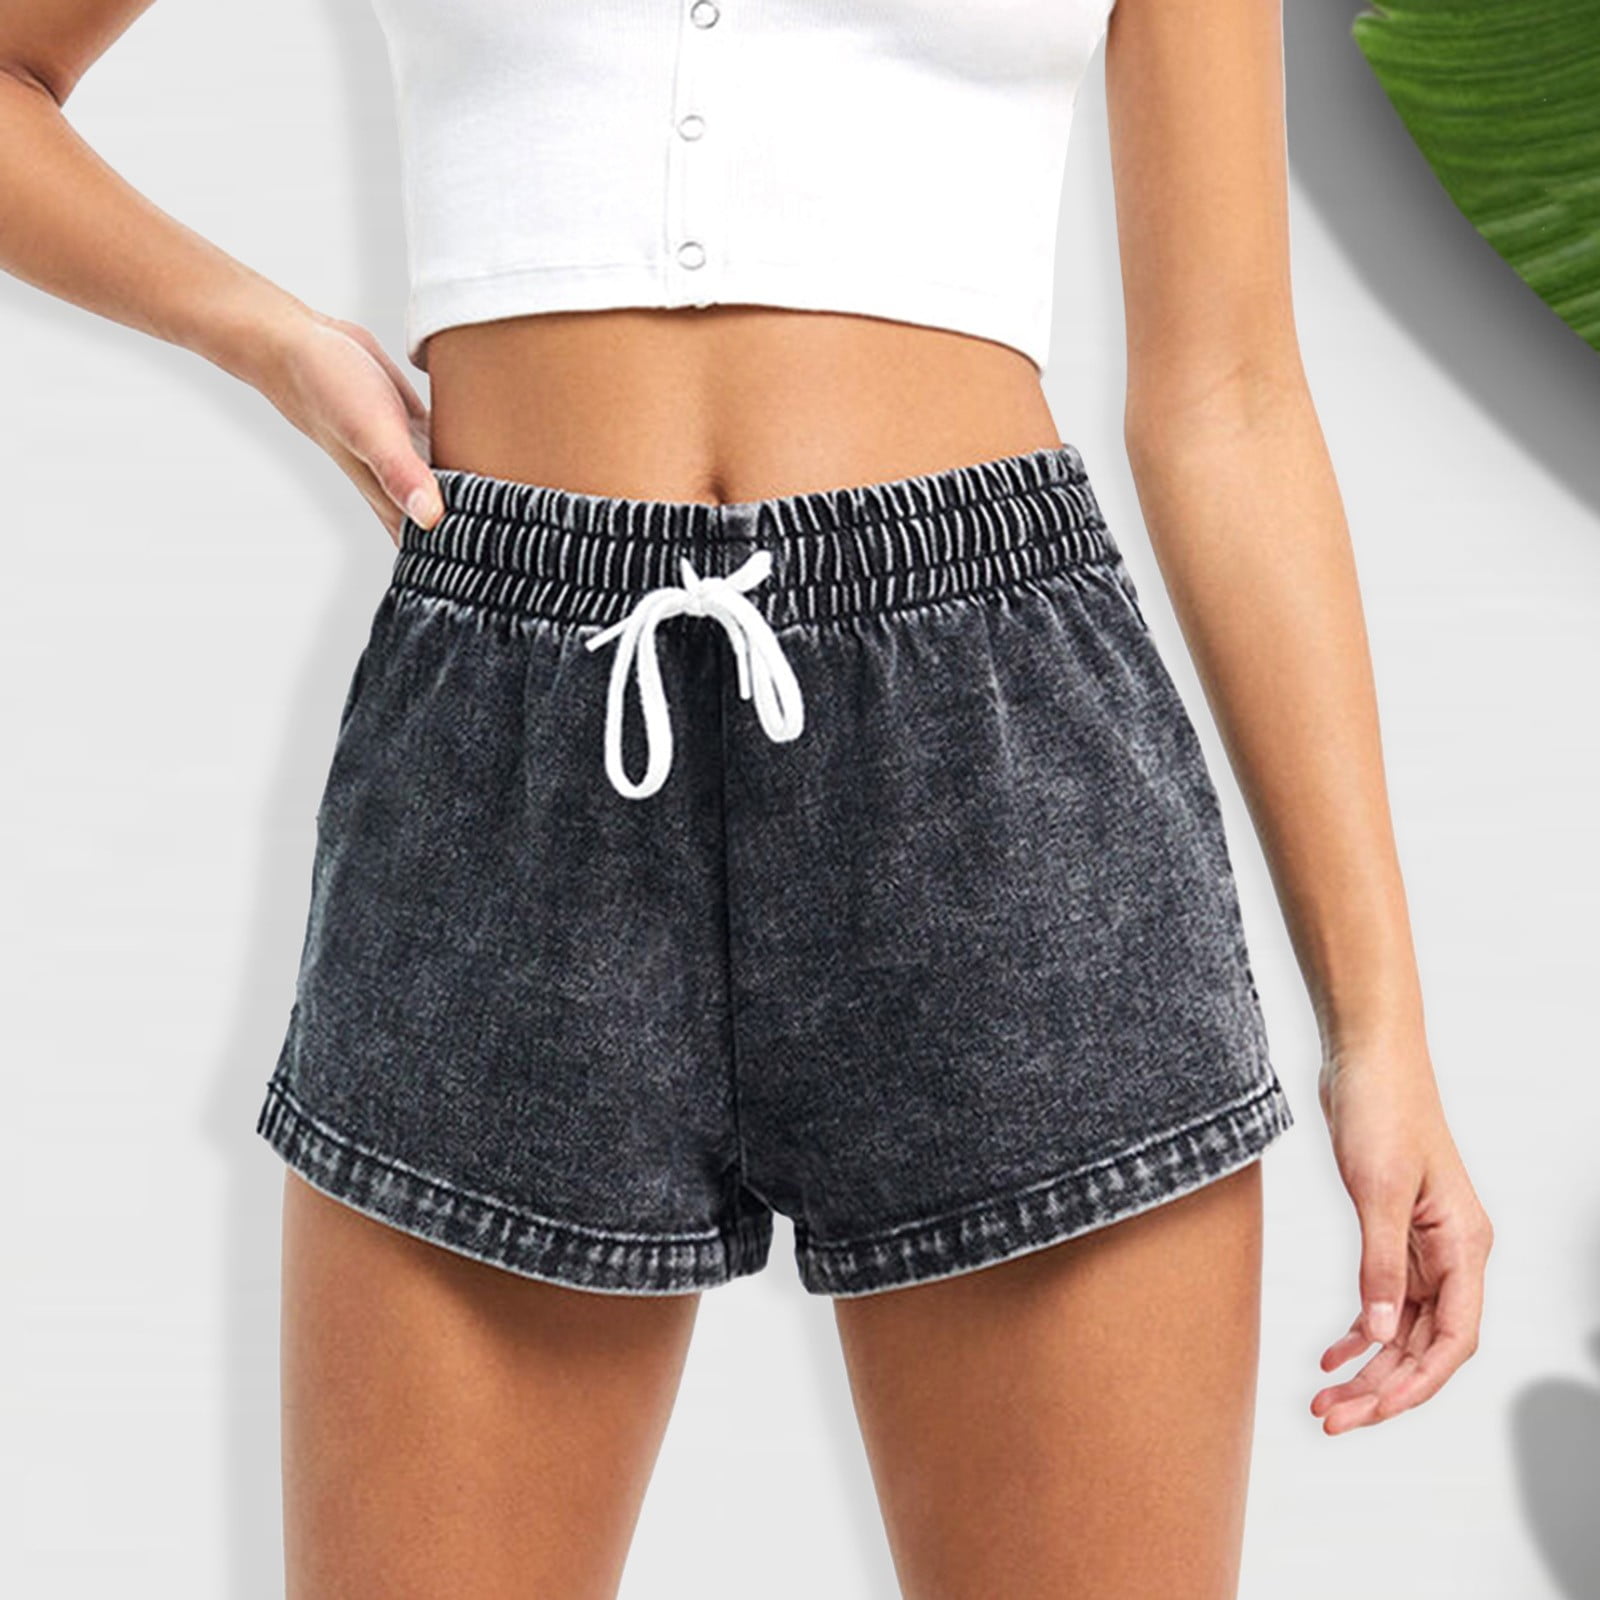 Andongnywell Womens Summer Frayed Raw Hem Shorts Casual Elastic Waist Short Pants with Pockets Fashion Denim Shorts 